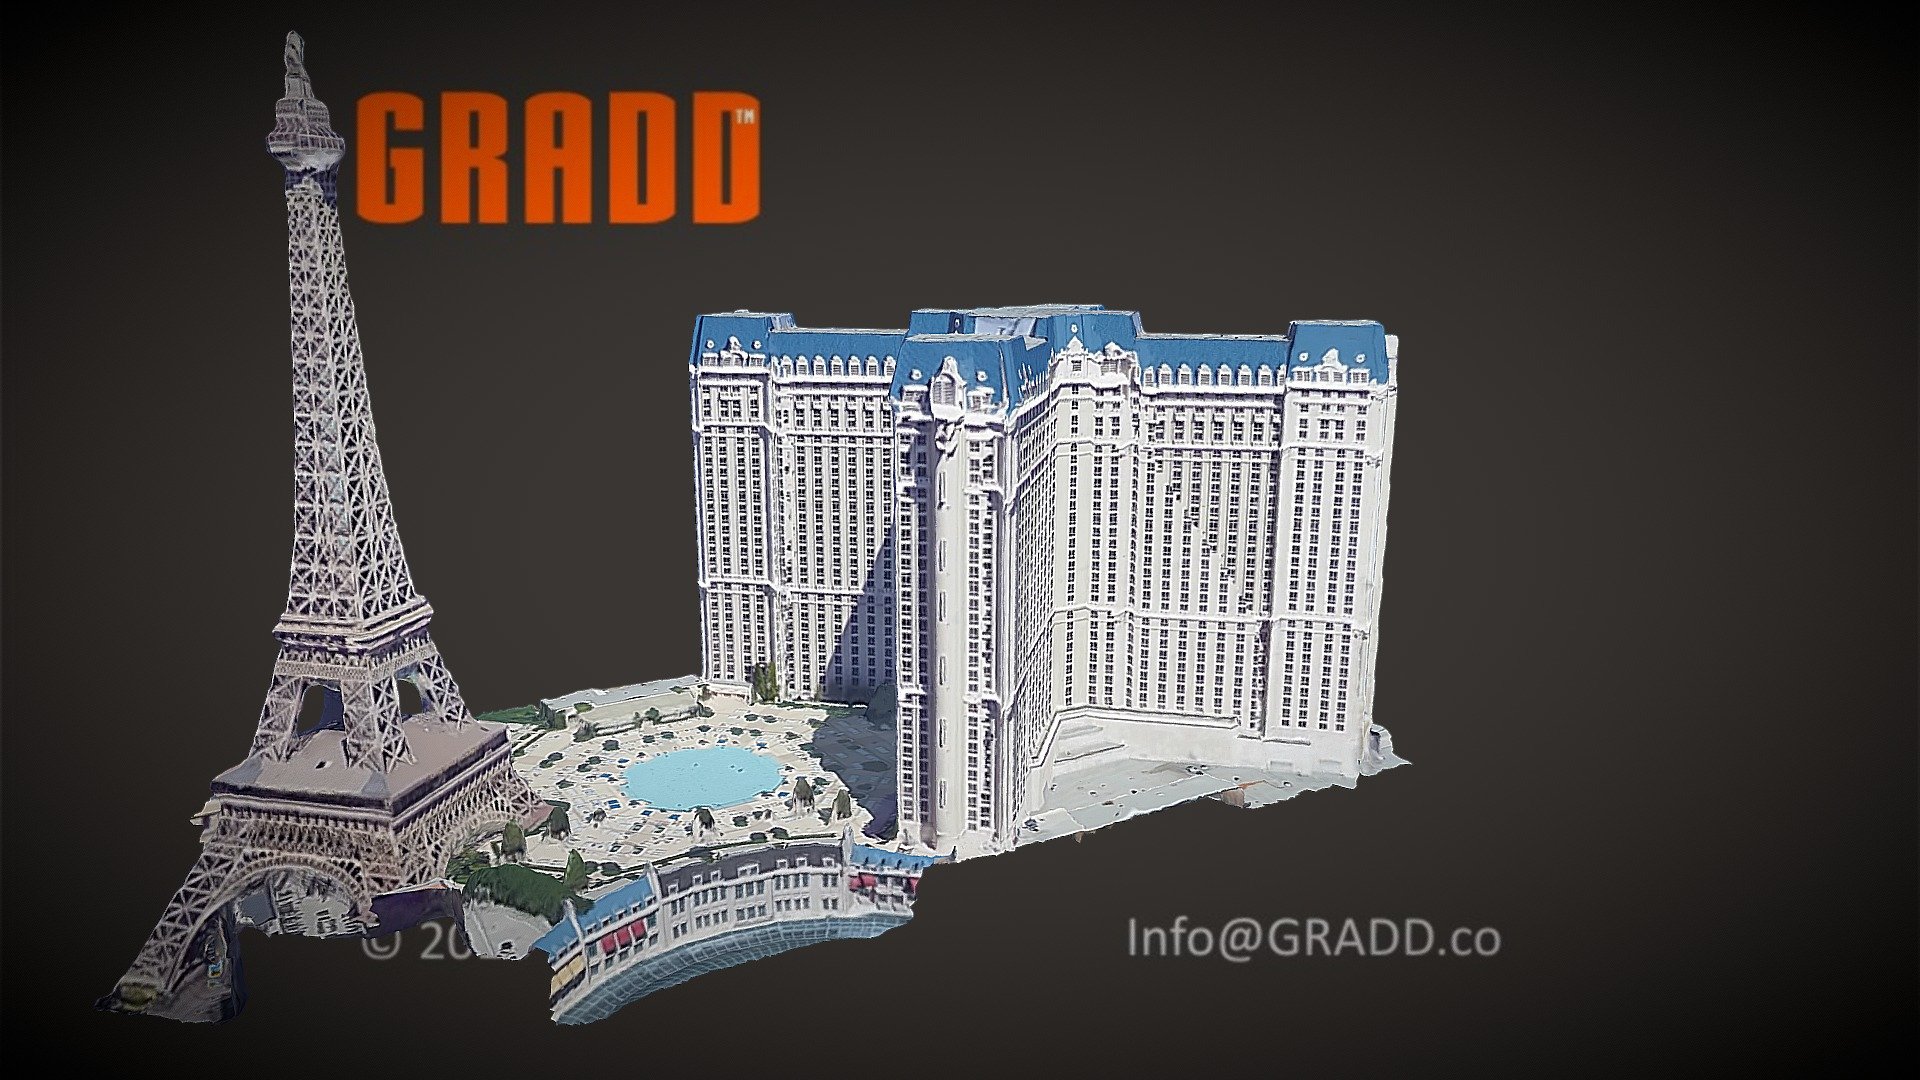  3D Rose 3dRose Paris Hotel and Casin at Las Vegas